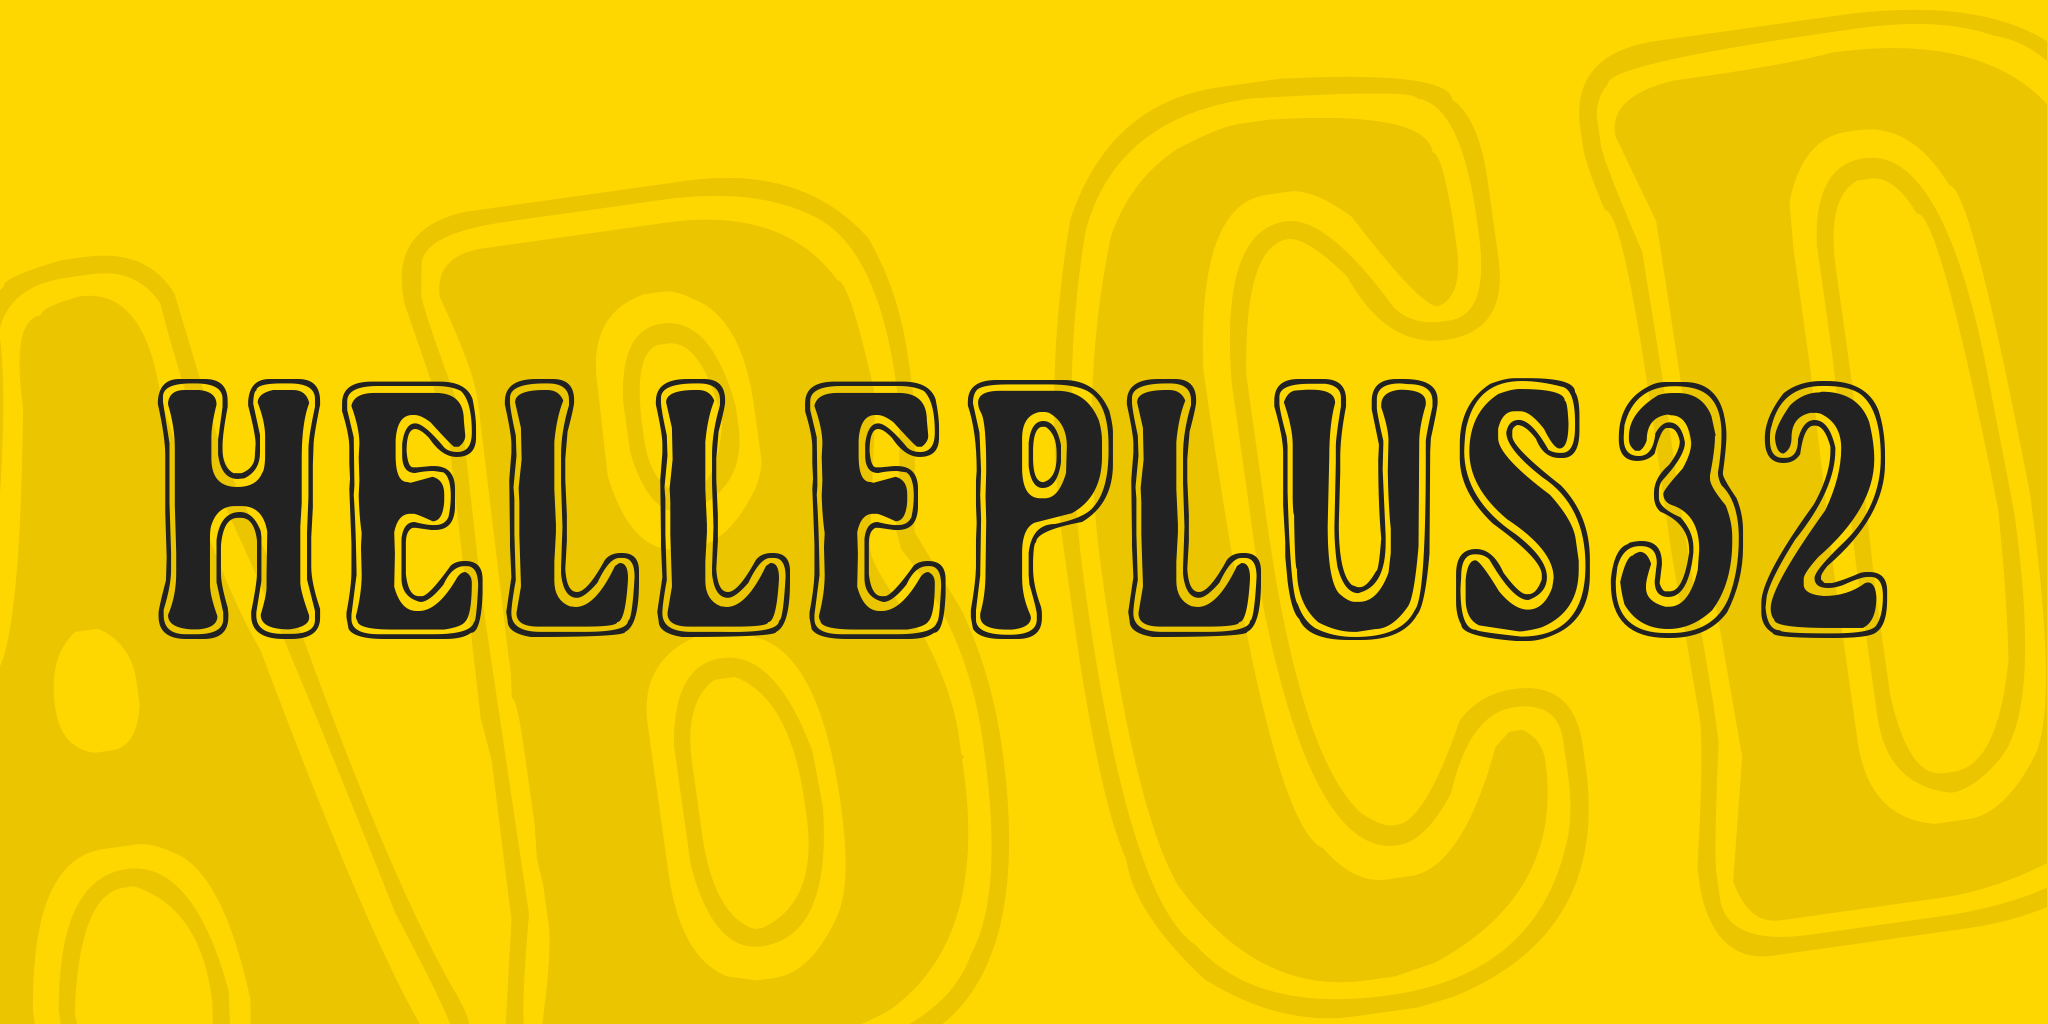 Helleplus 32